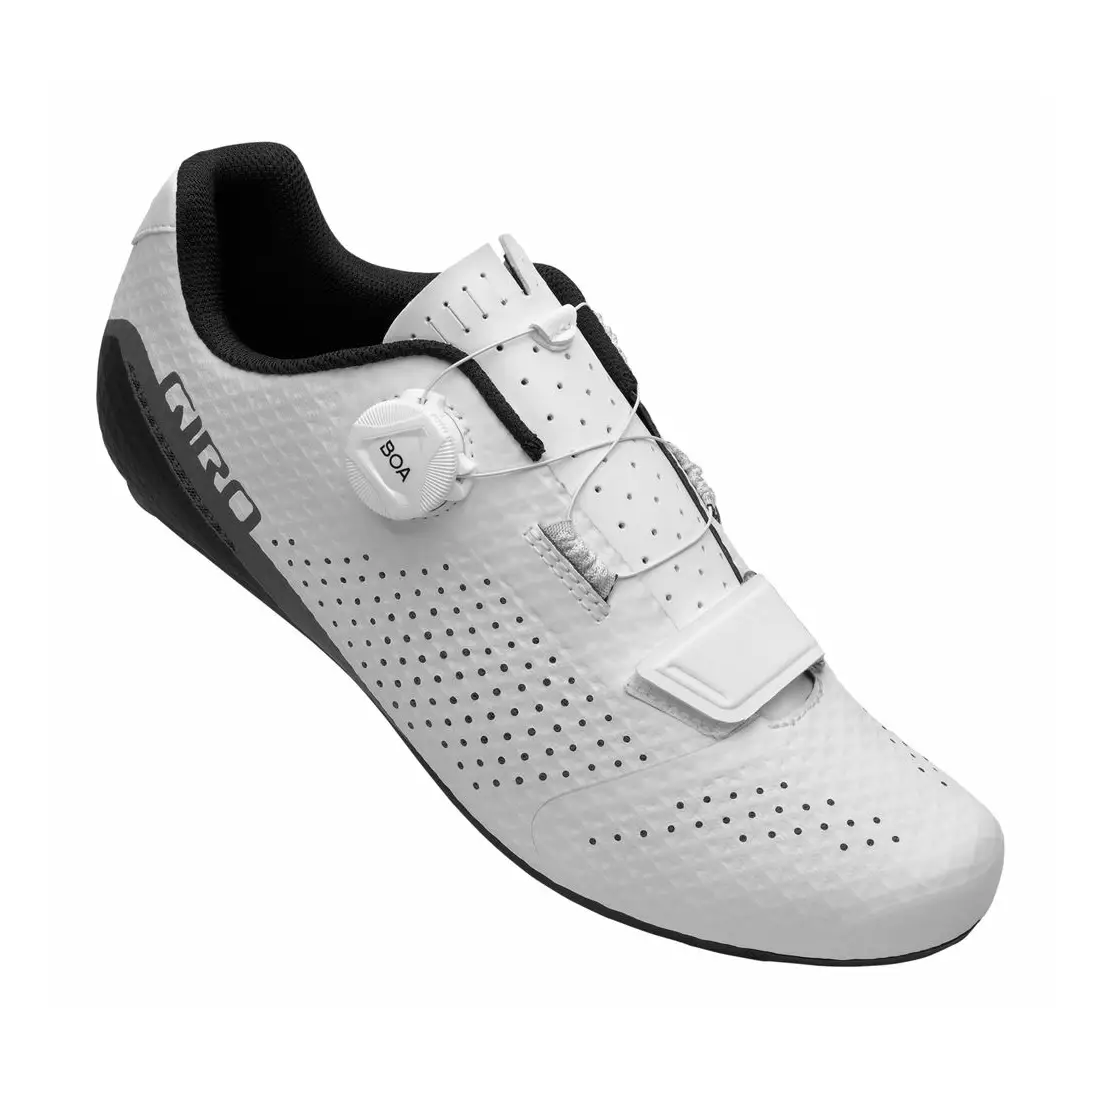 GIRO men's bicycle shoes CADET white GR-7123088